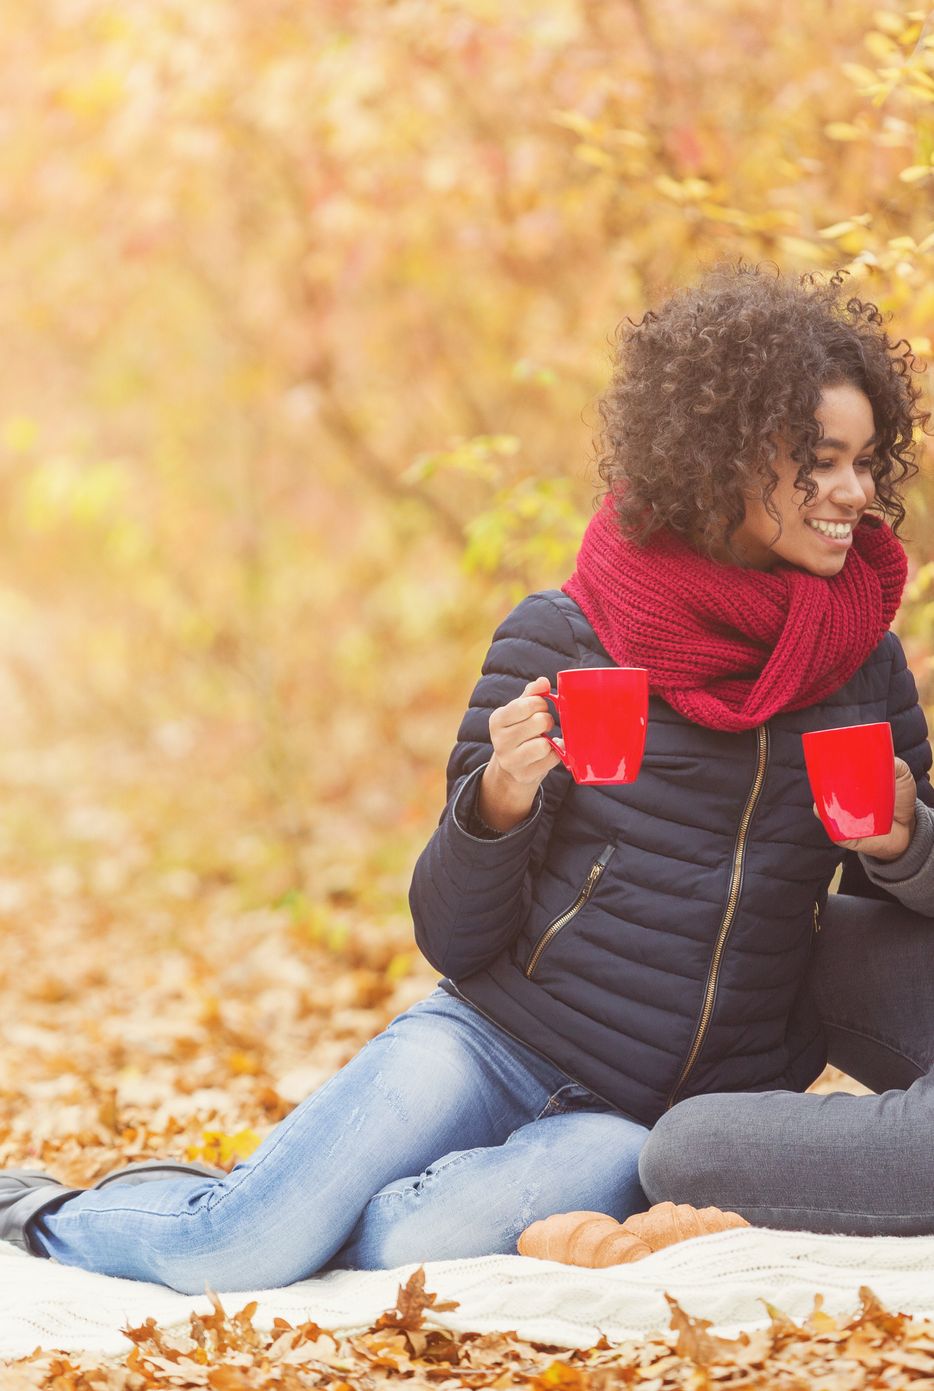 40 Best Fall Date Ideas - Fun Autumn Date Ideas for Couples